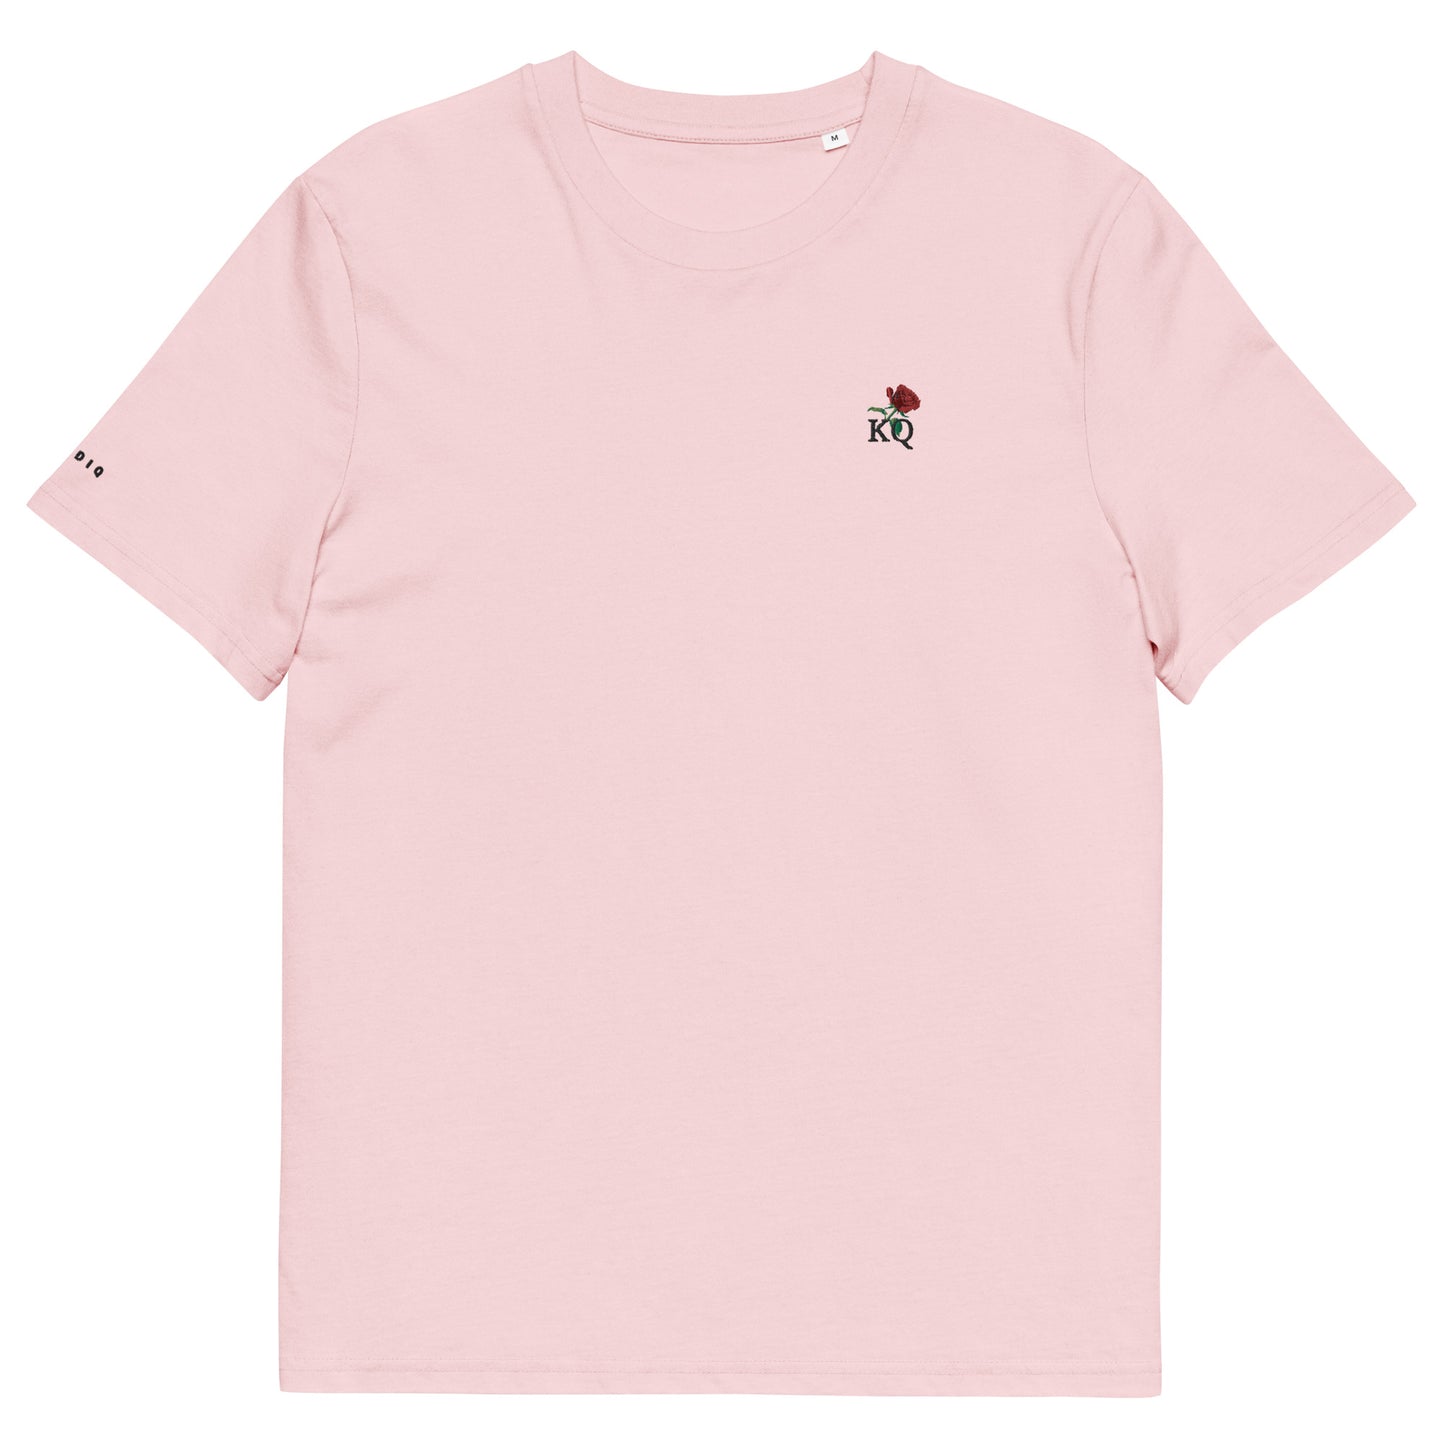 Klediq T-shirt / Cotton pink